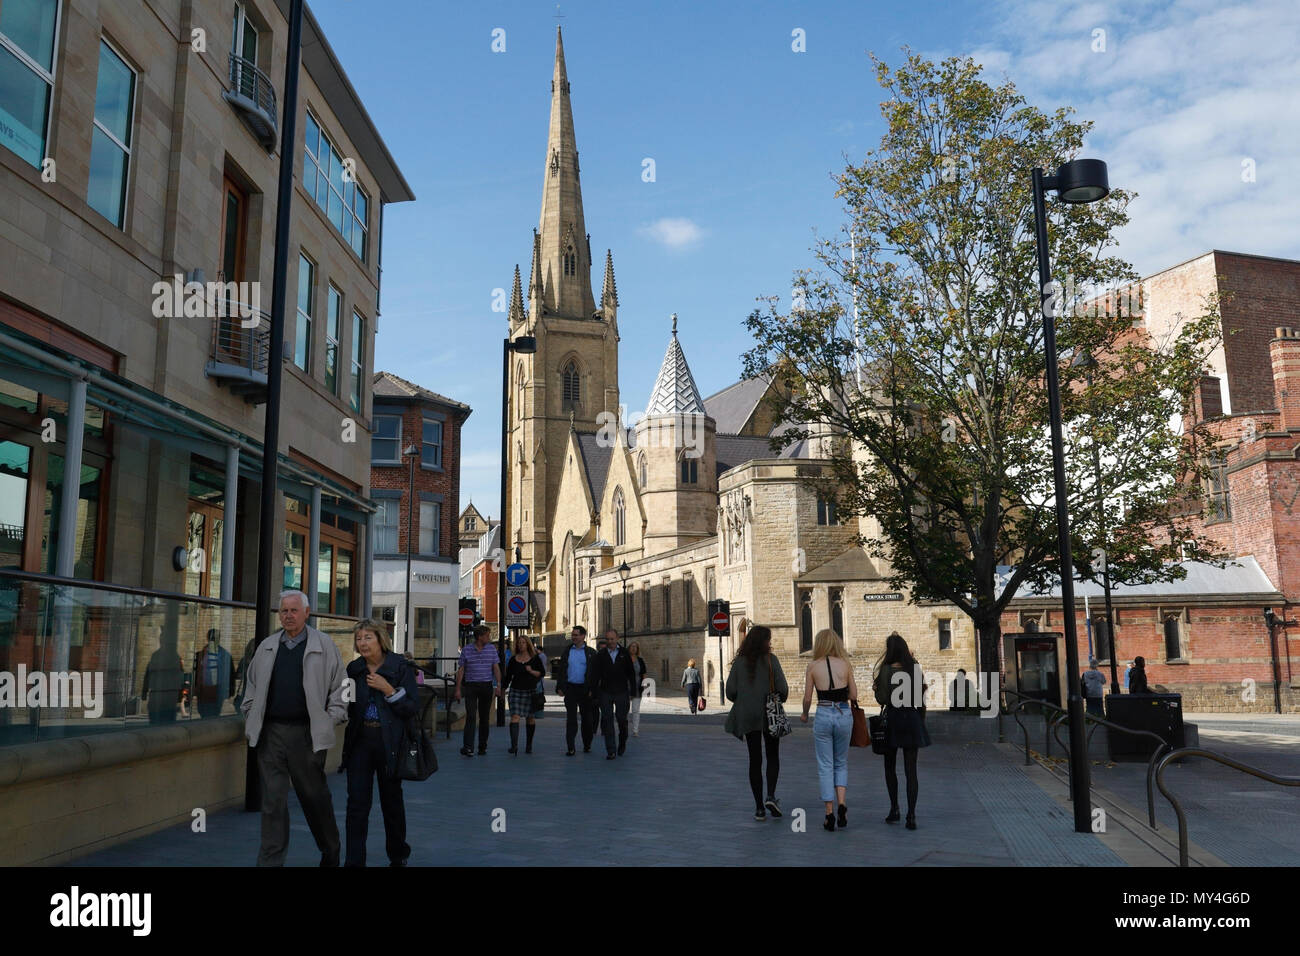 Tudor Square in Sheffield city centre. Roman Catholic Cathedral Church of St Marie, England UK streetscene Stock Photo